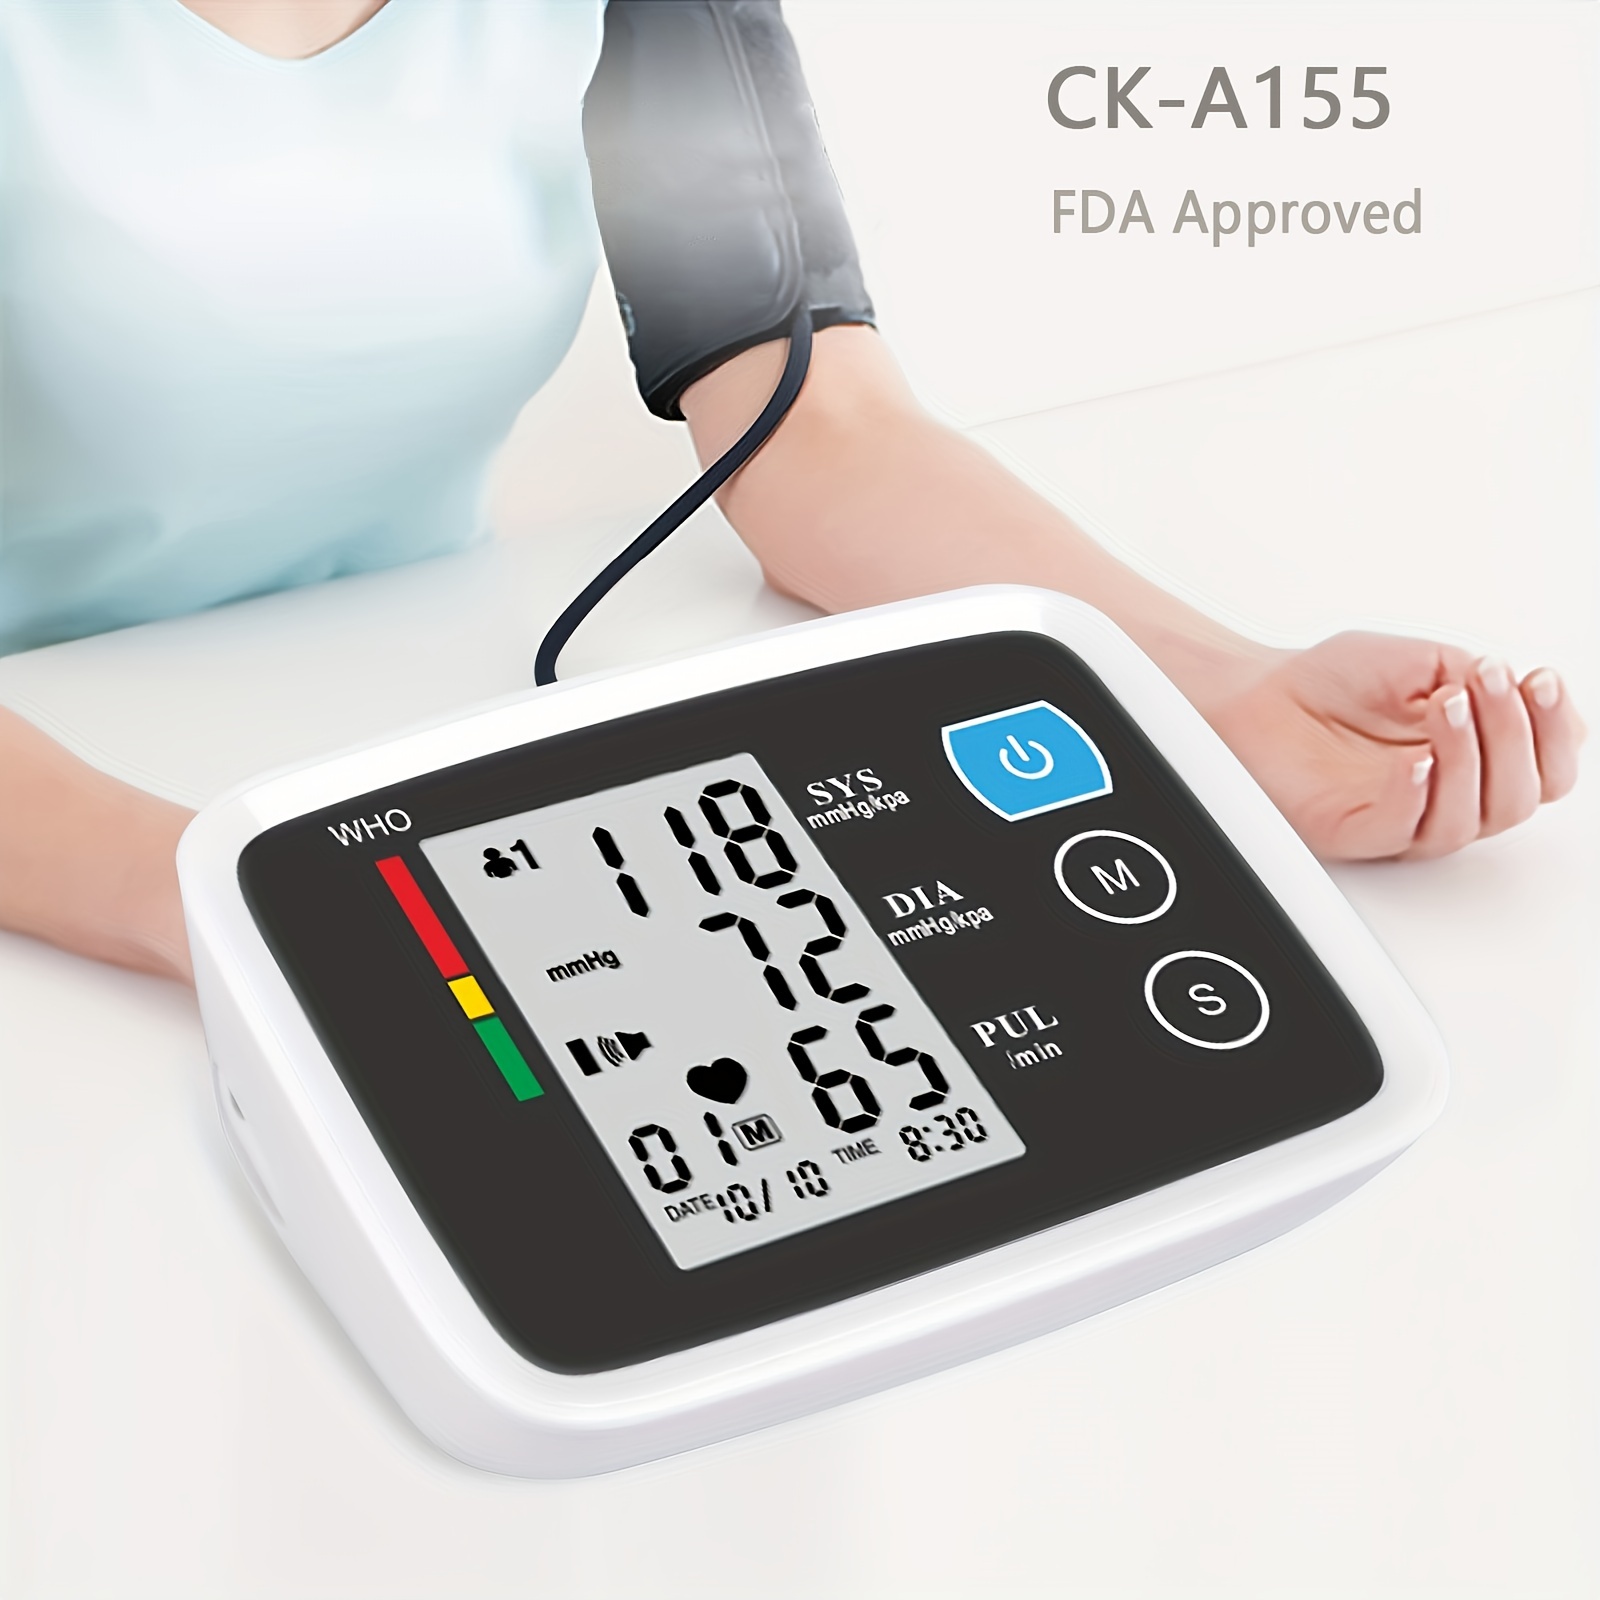 Bath & Body  Blood Pressure Monitor Upper Arm Lovia Accurate